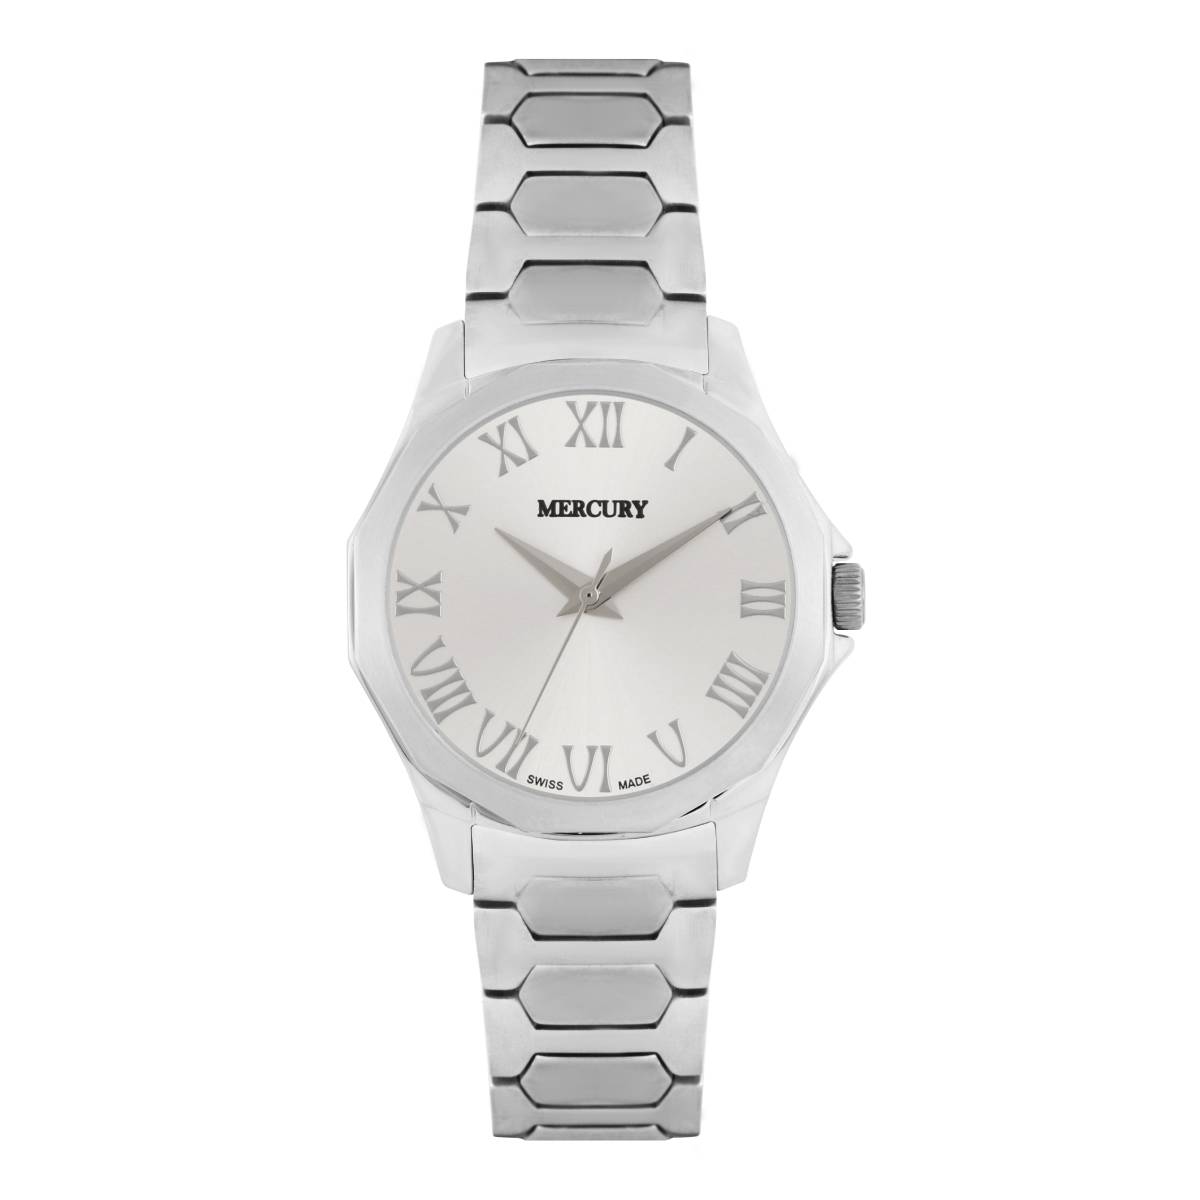 Mercury Women's Swiss Quartz Watch with White Dial - MER-0018